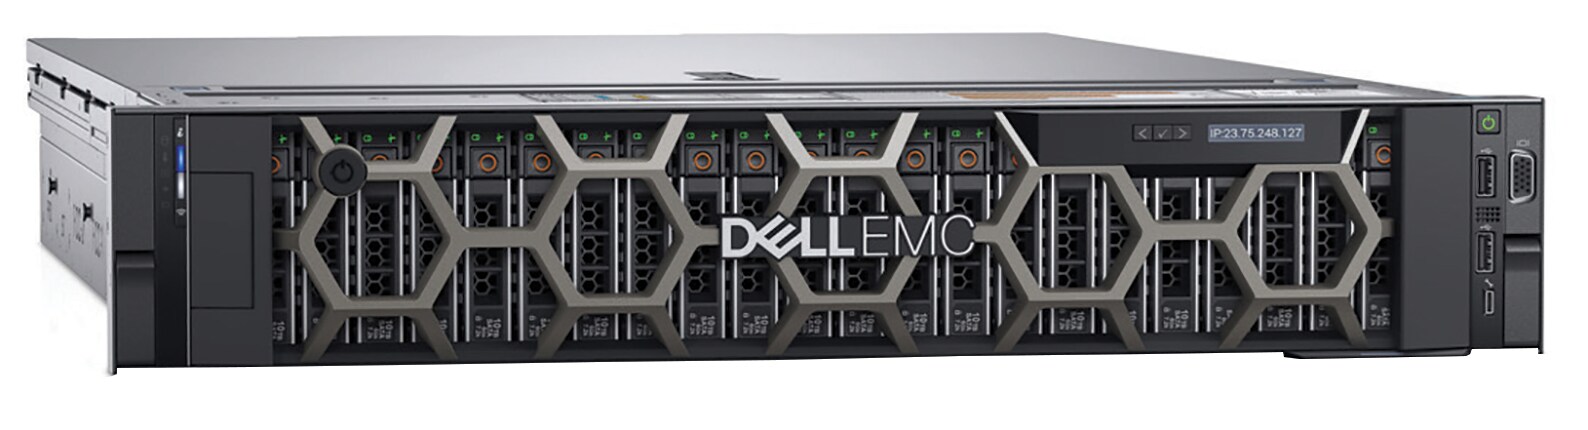 Procurri Dell PowerEdge R740 Rack Server